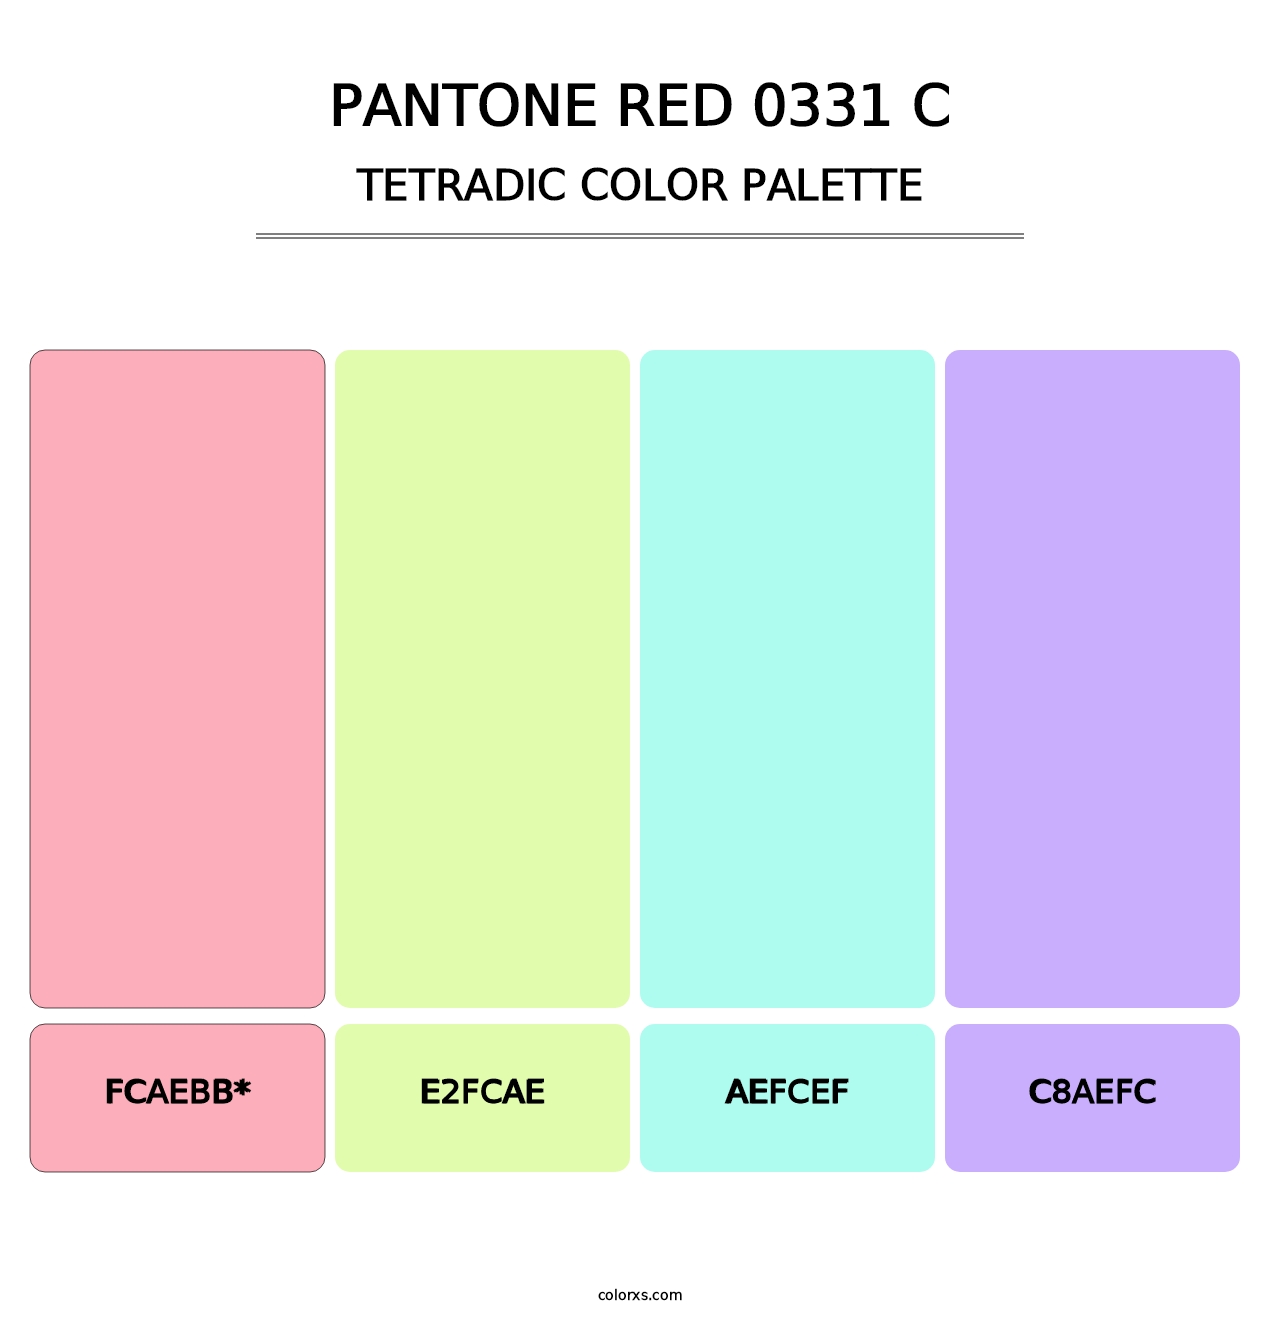 PANTONE Red 0331 C - Tetradic Color Palette